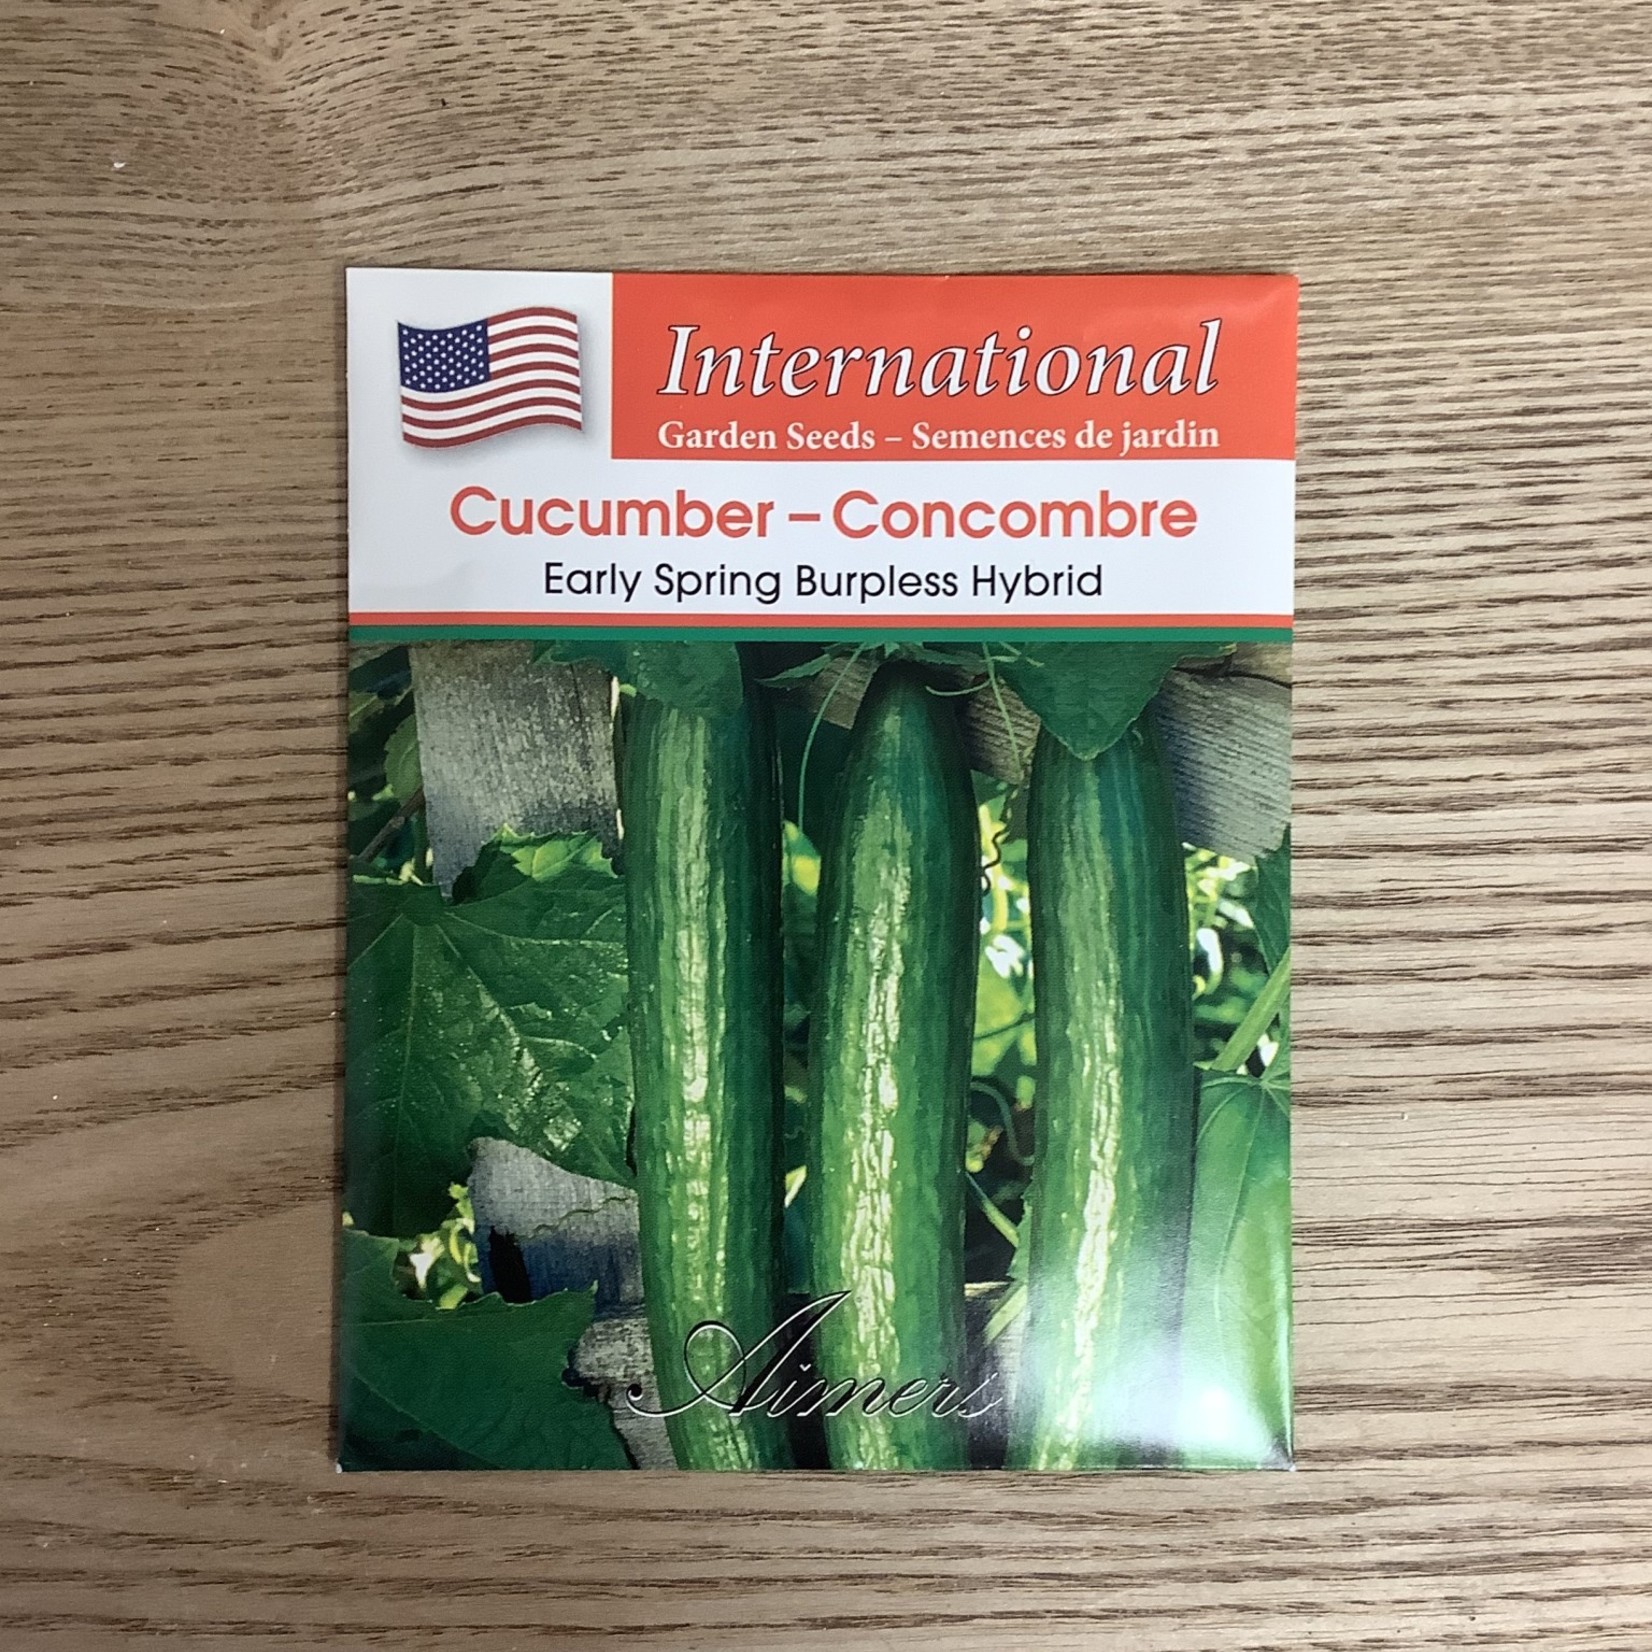 Aimers International Cucumber Early Spring Burpless Hybrid seeds